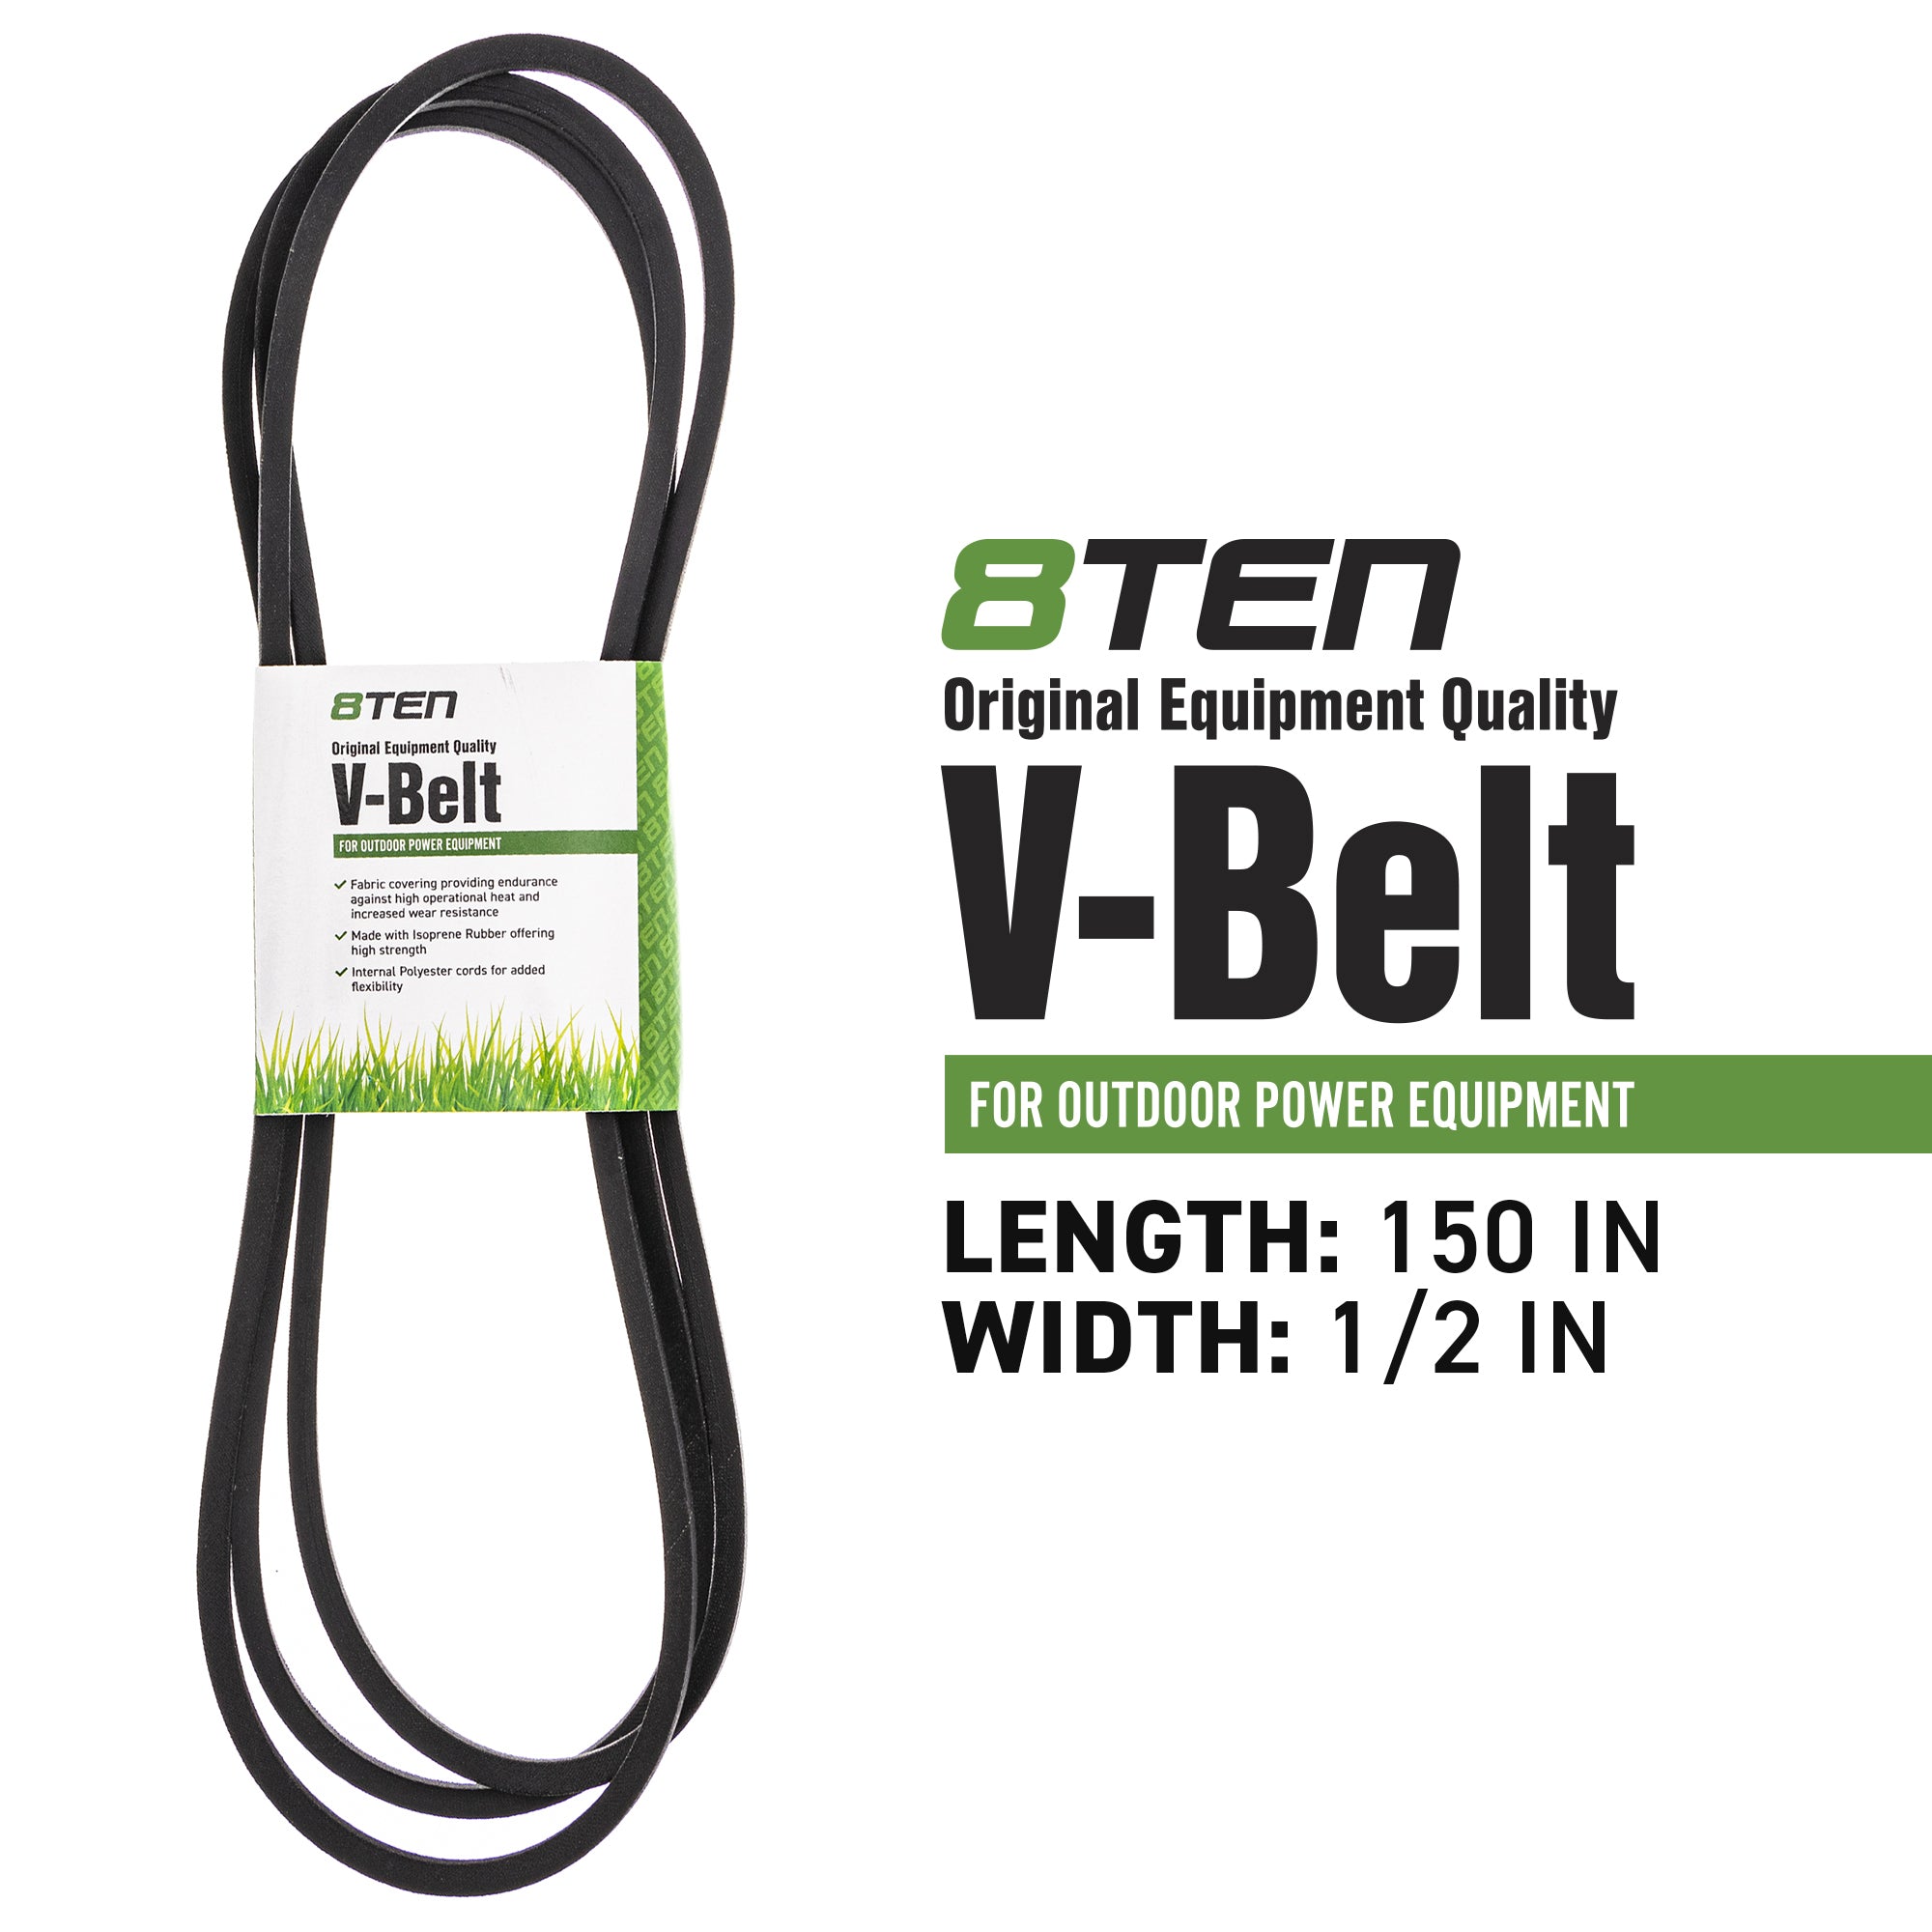 8TEN MK1006399 Clutch Belt Kit for Xtreme Warner Stens John Deere